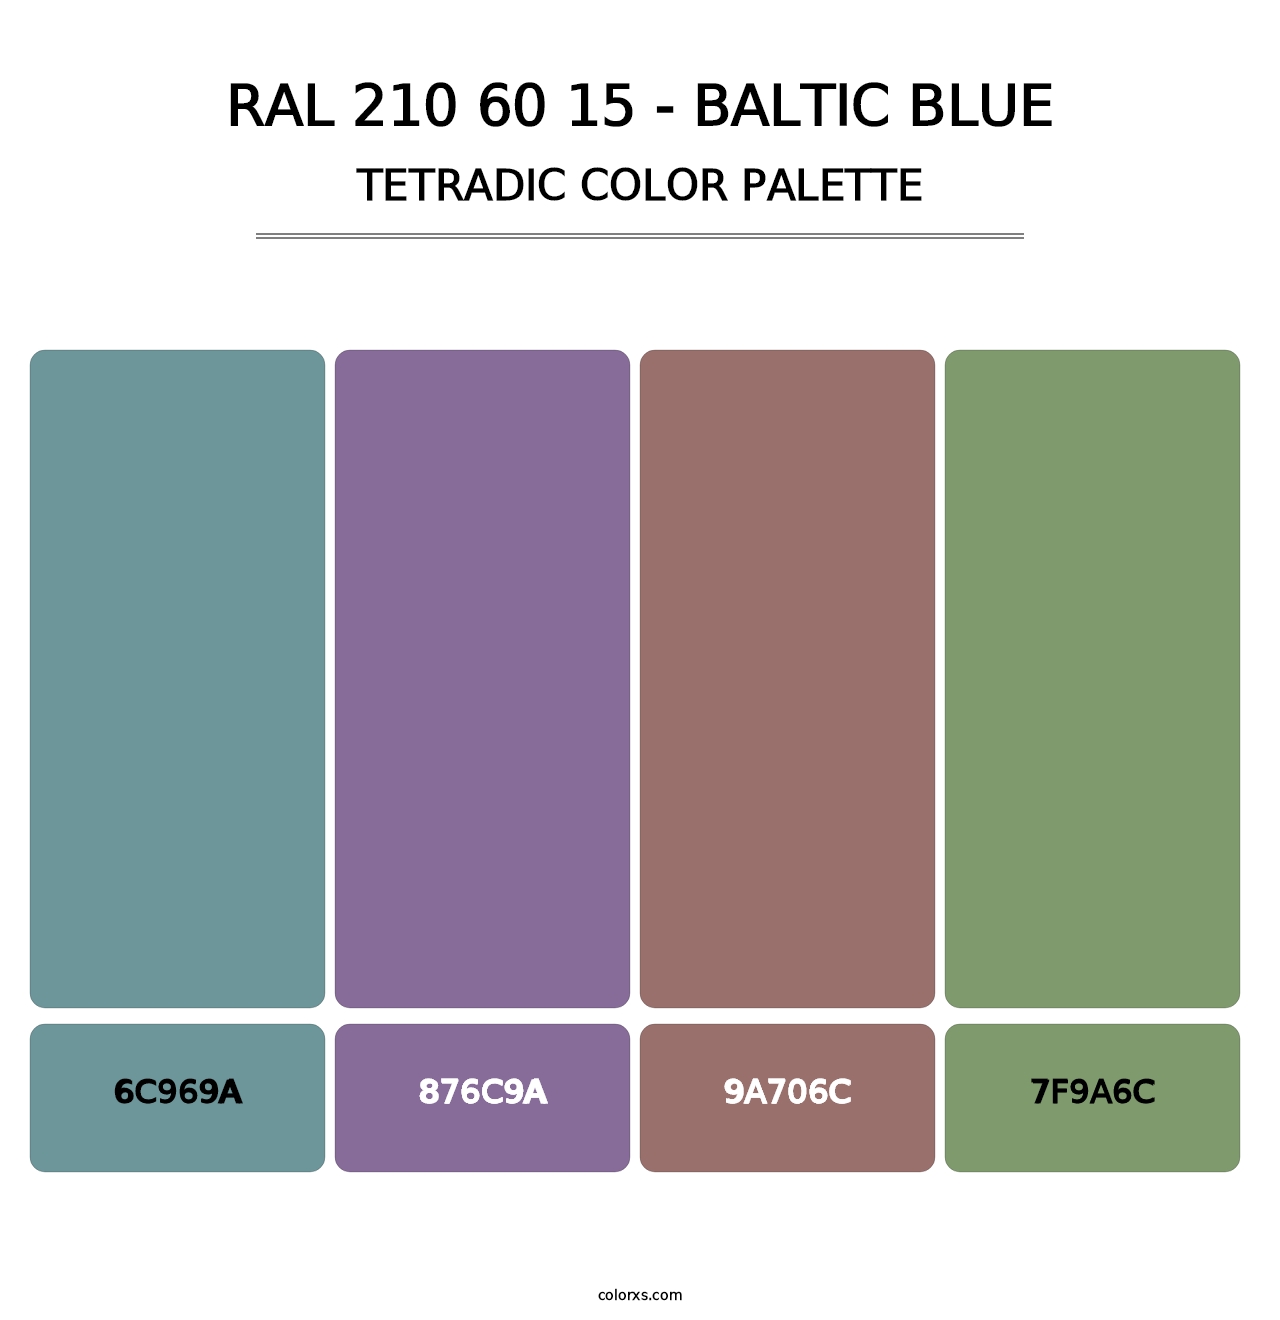 RAL 210 60 15 - Baltic Blue - Tetradic Color Palette